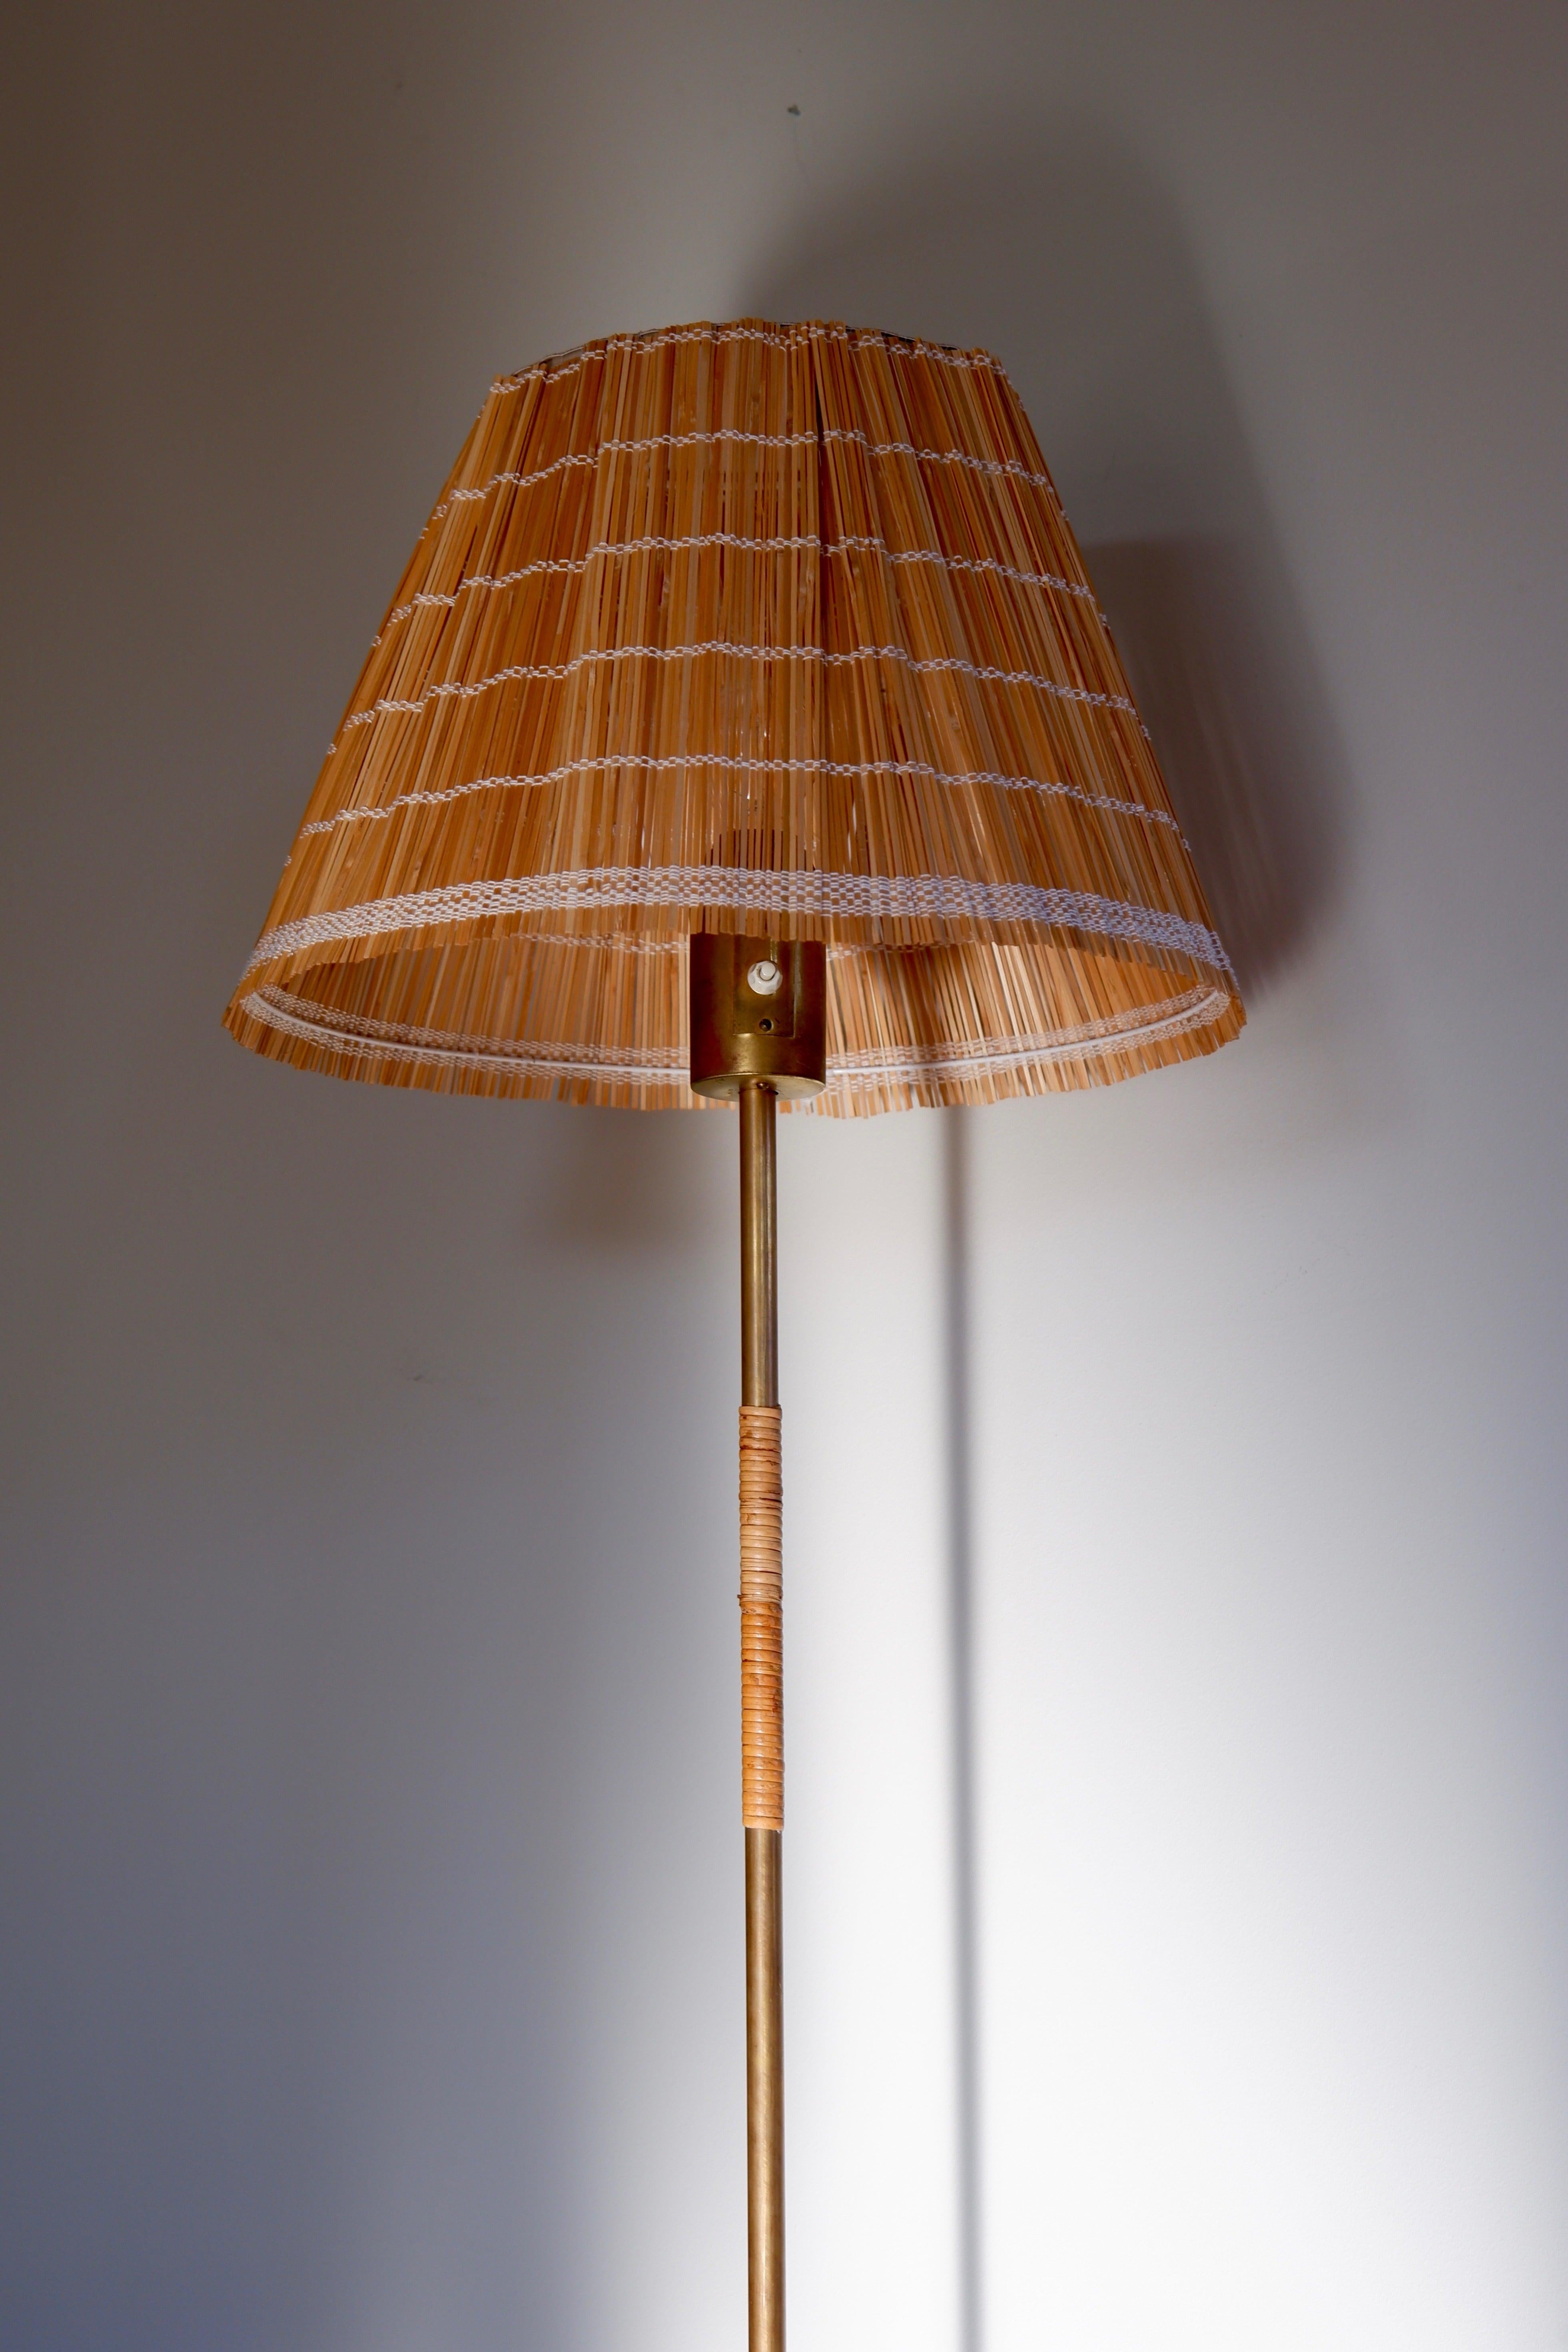 Finnish Paavo Tynell Floor Lamp Model K10-13 for Idman circa 1950, Woodstraw Shade